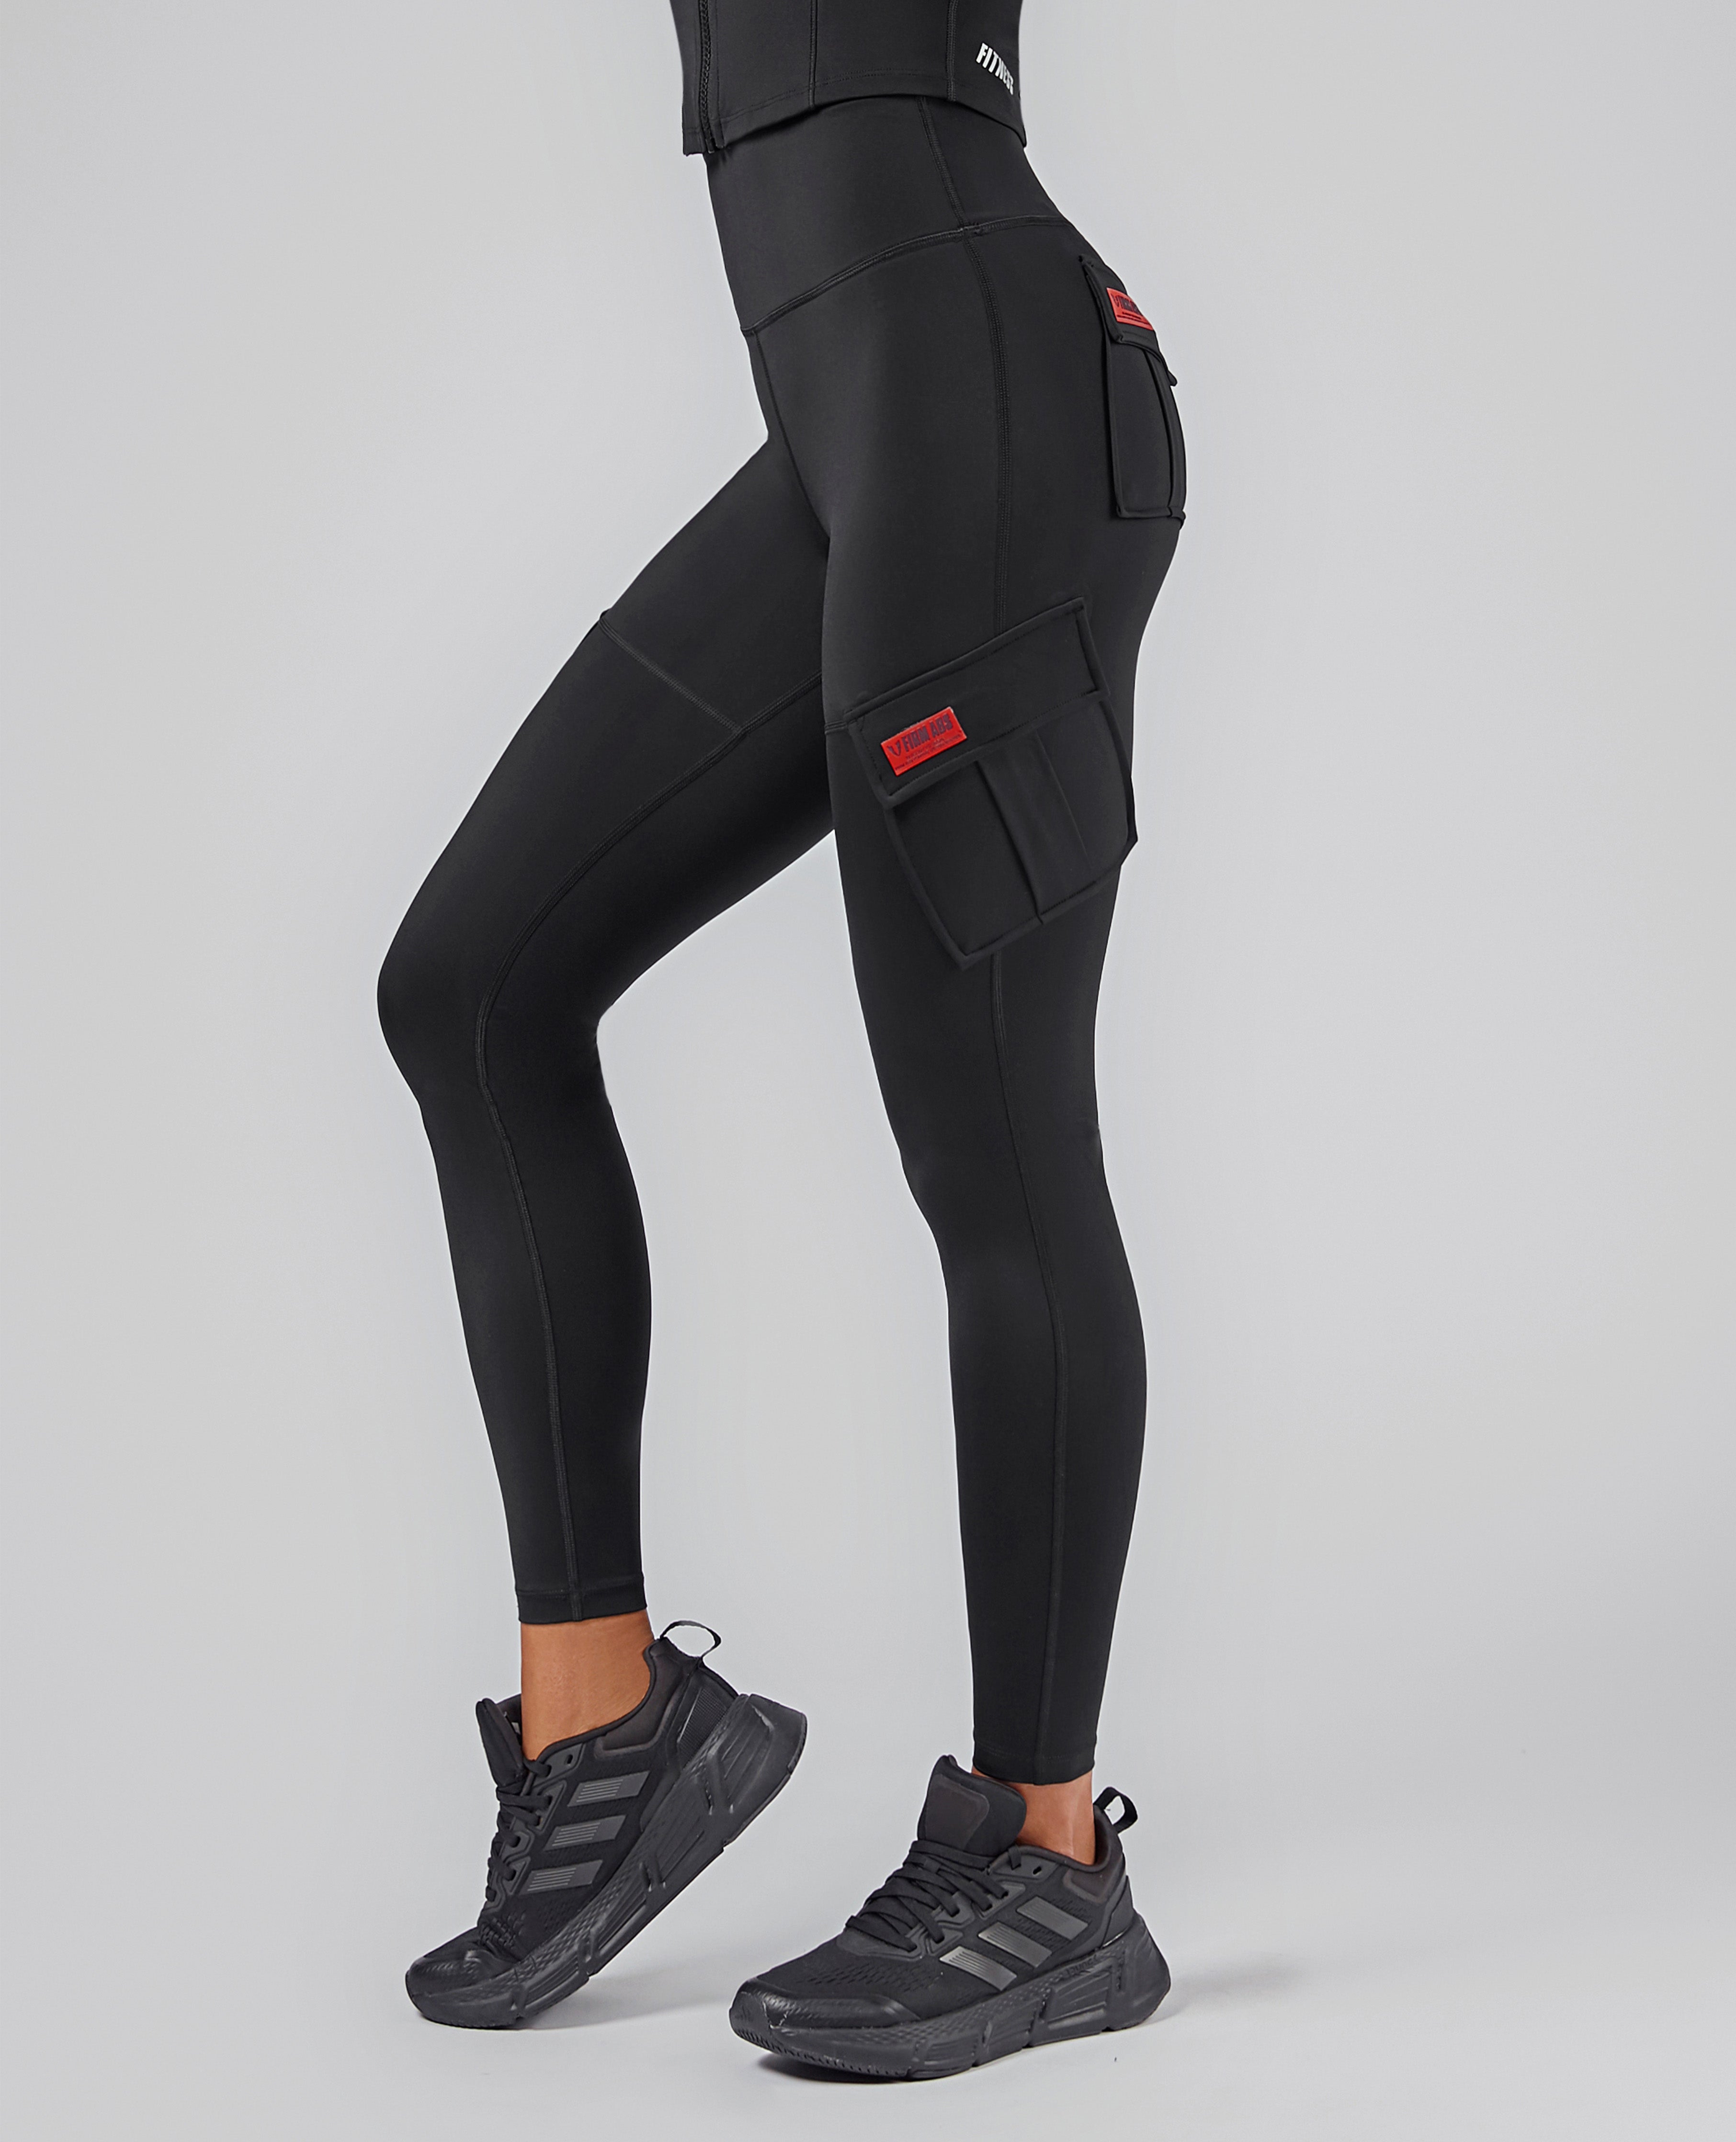 Ollrynns Leggings for Women UK Gym Leggings with Pockets High Waist Yoga  Pants Tummy Control Sports Workout Trousers CA166(Black XS) : :  Fashion